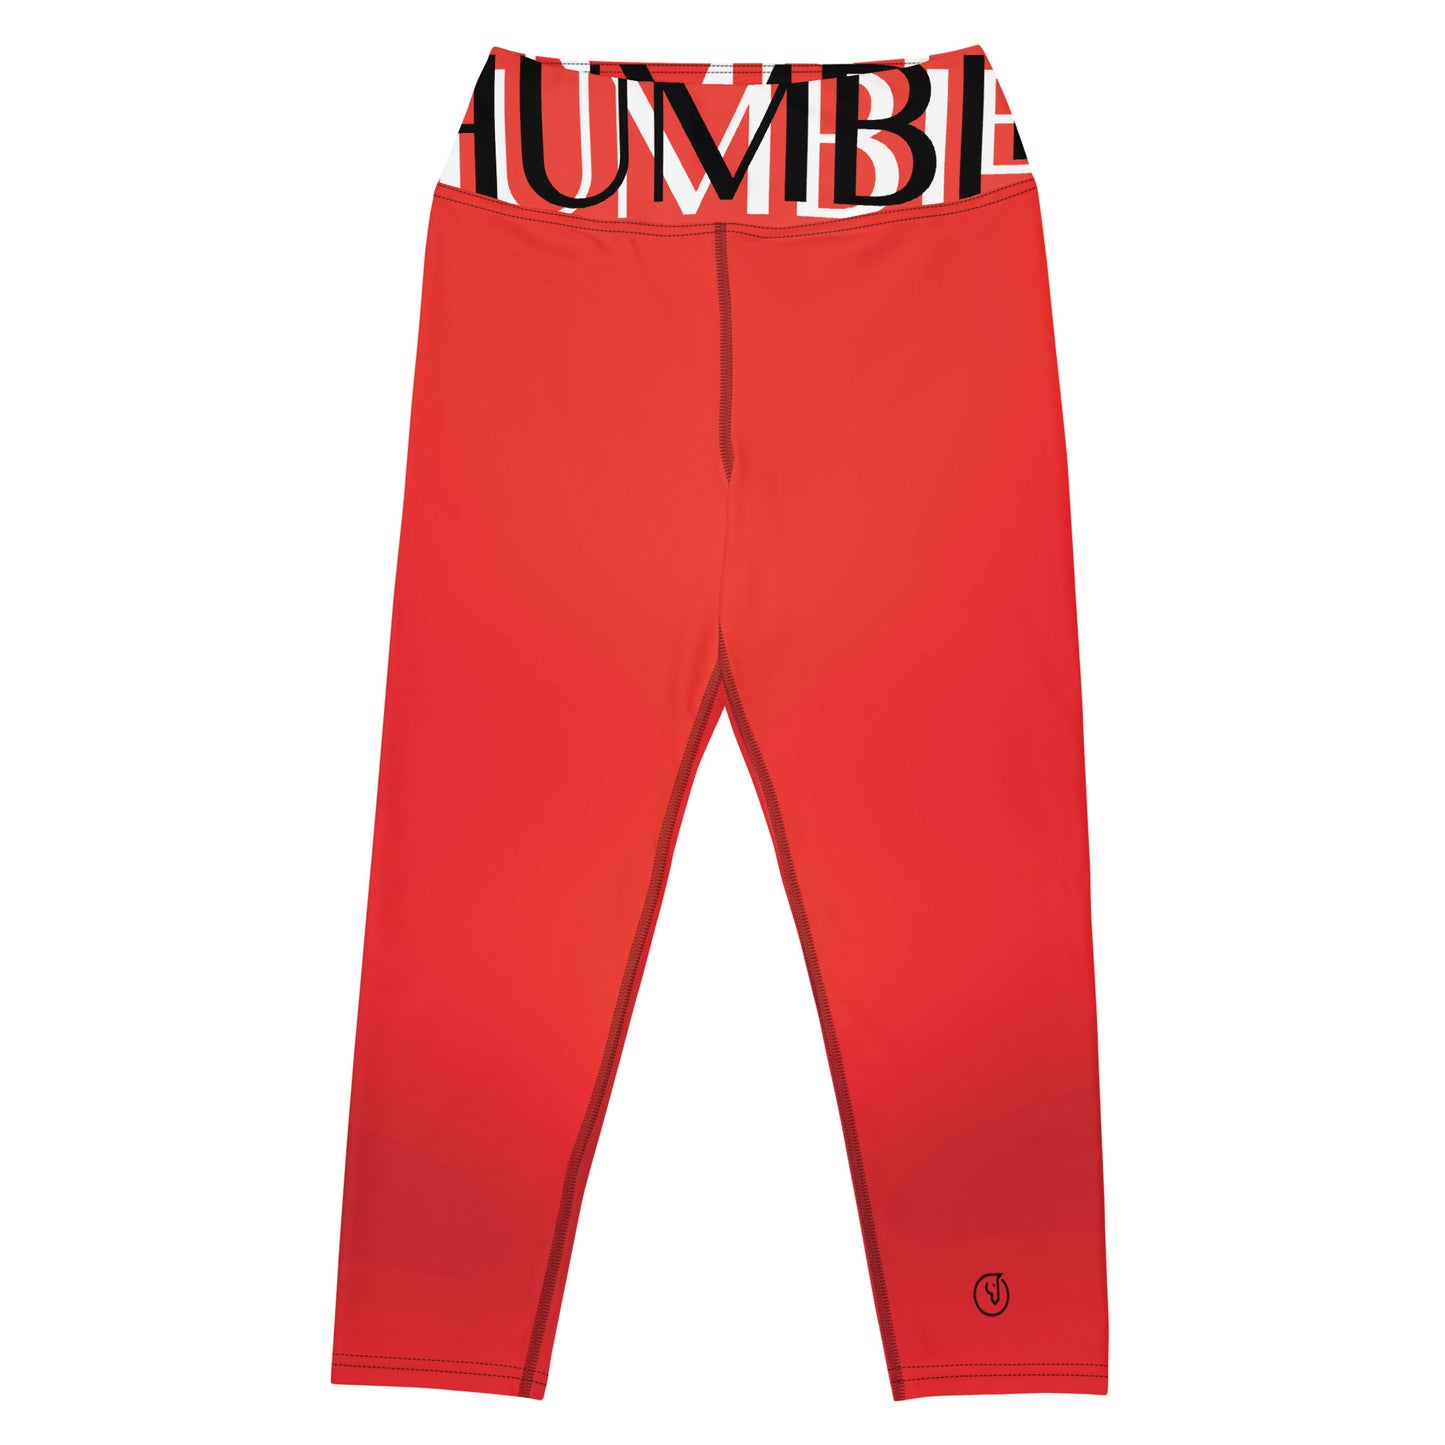 Humble Sportswear, red women's capri leggings, mid-calf length yoga leggings 